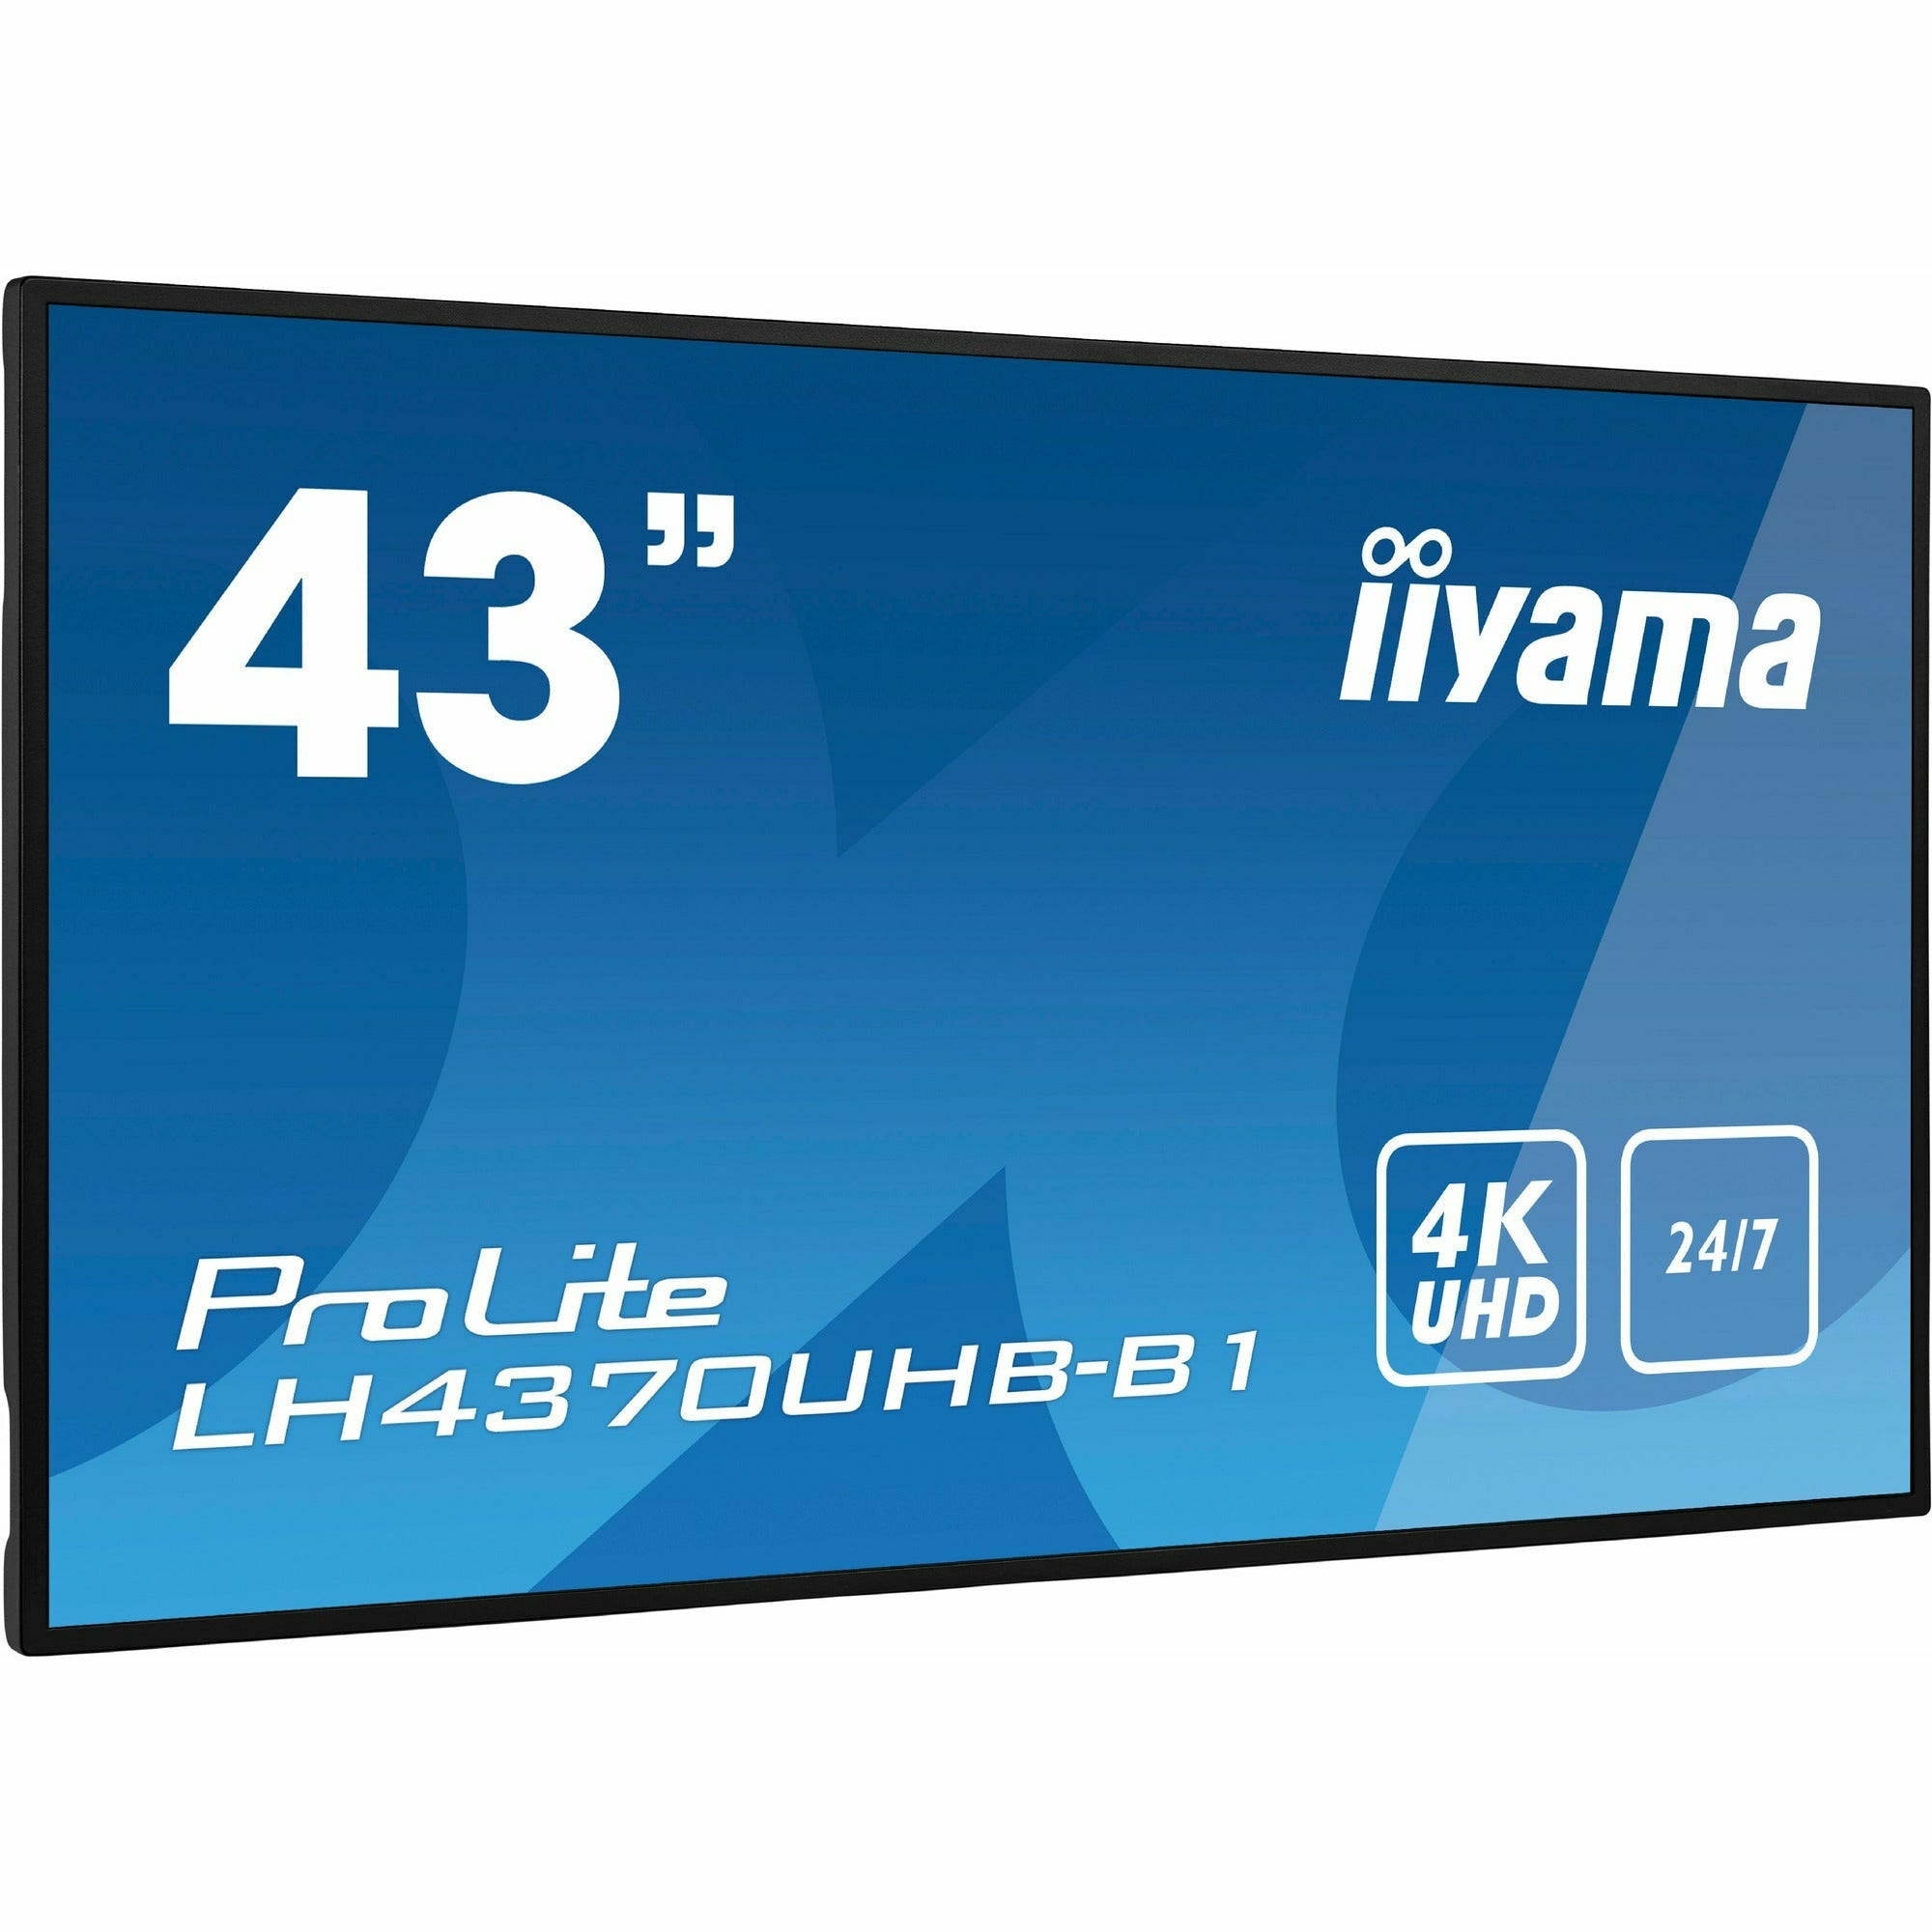 iiyama ProLite LH4370UHB-B1 43” Large Format Display with 24/7, 4K UHD, Android 9.0 and 700cd/m² High Brightness